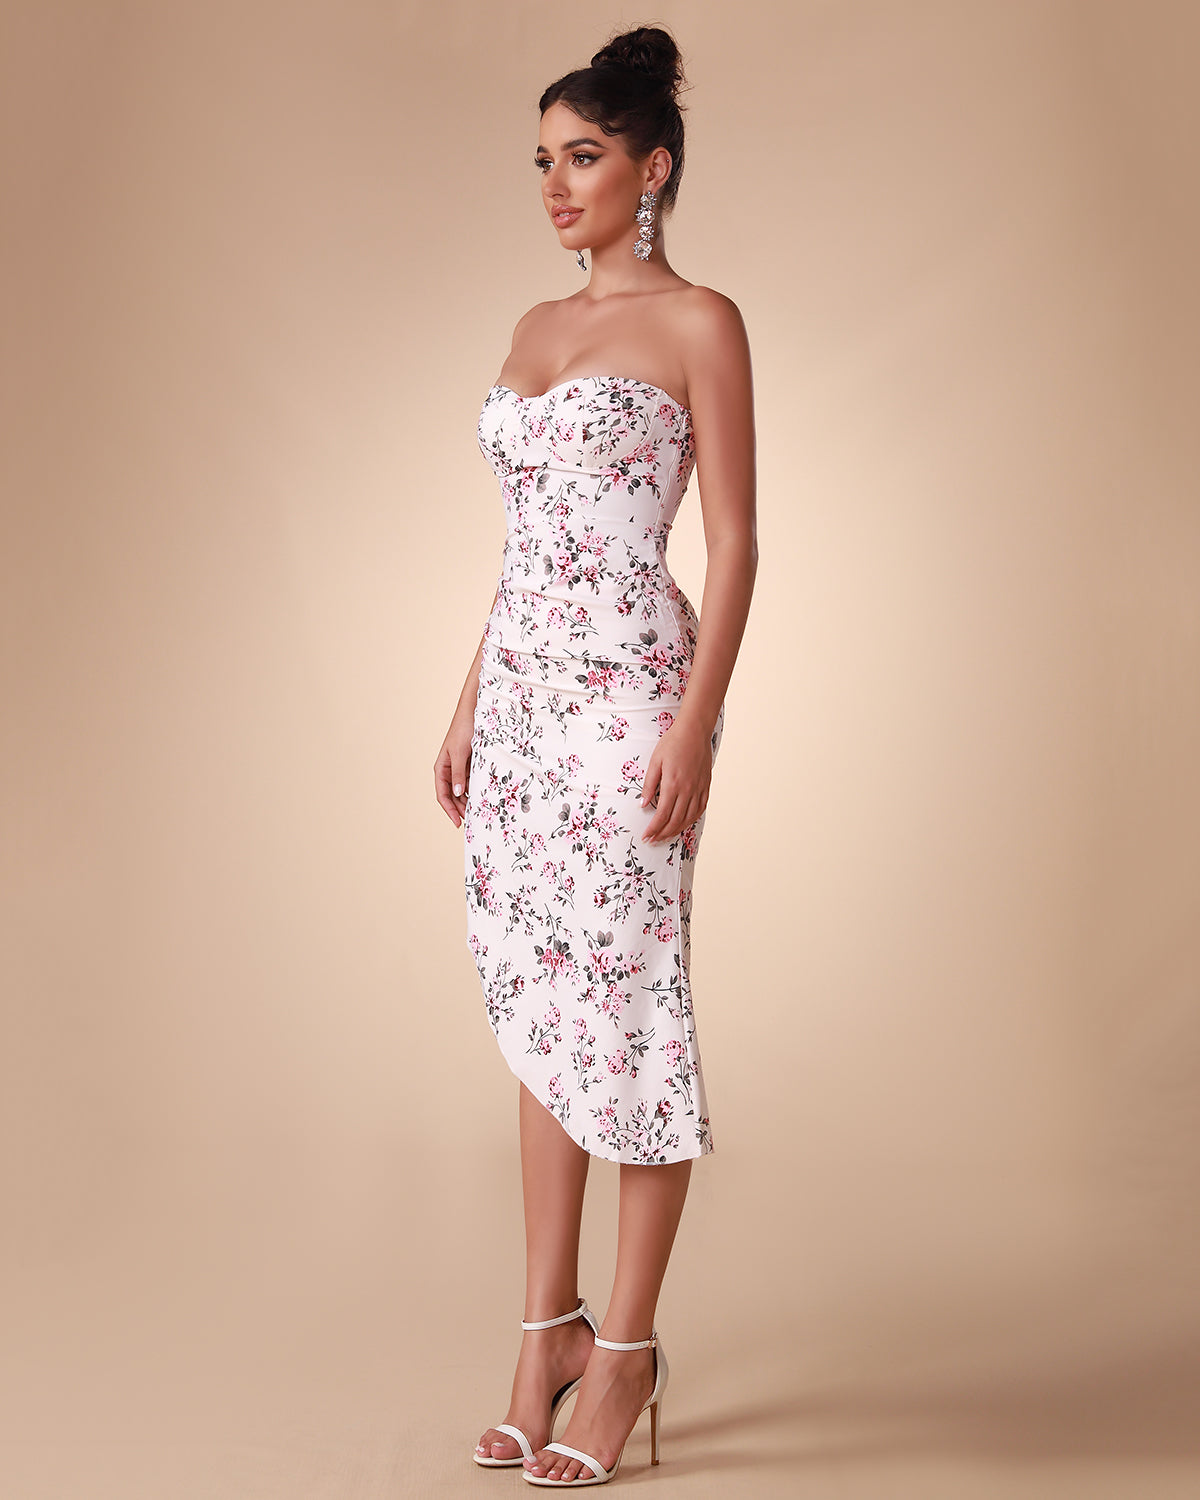 Floral Print Satin Strapless Dress